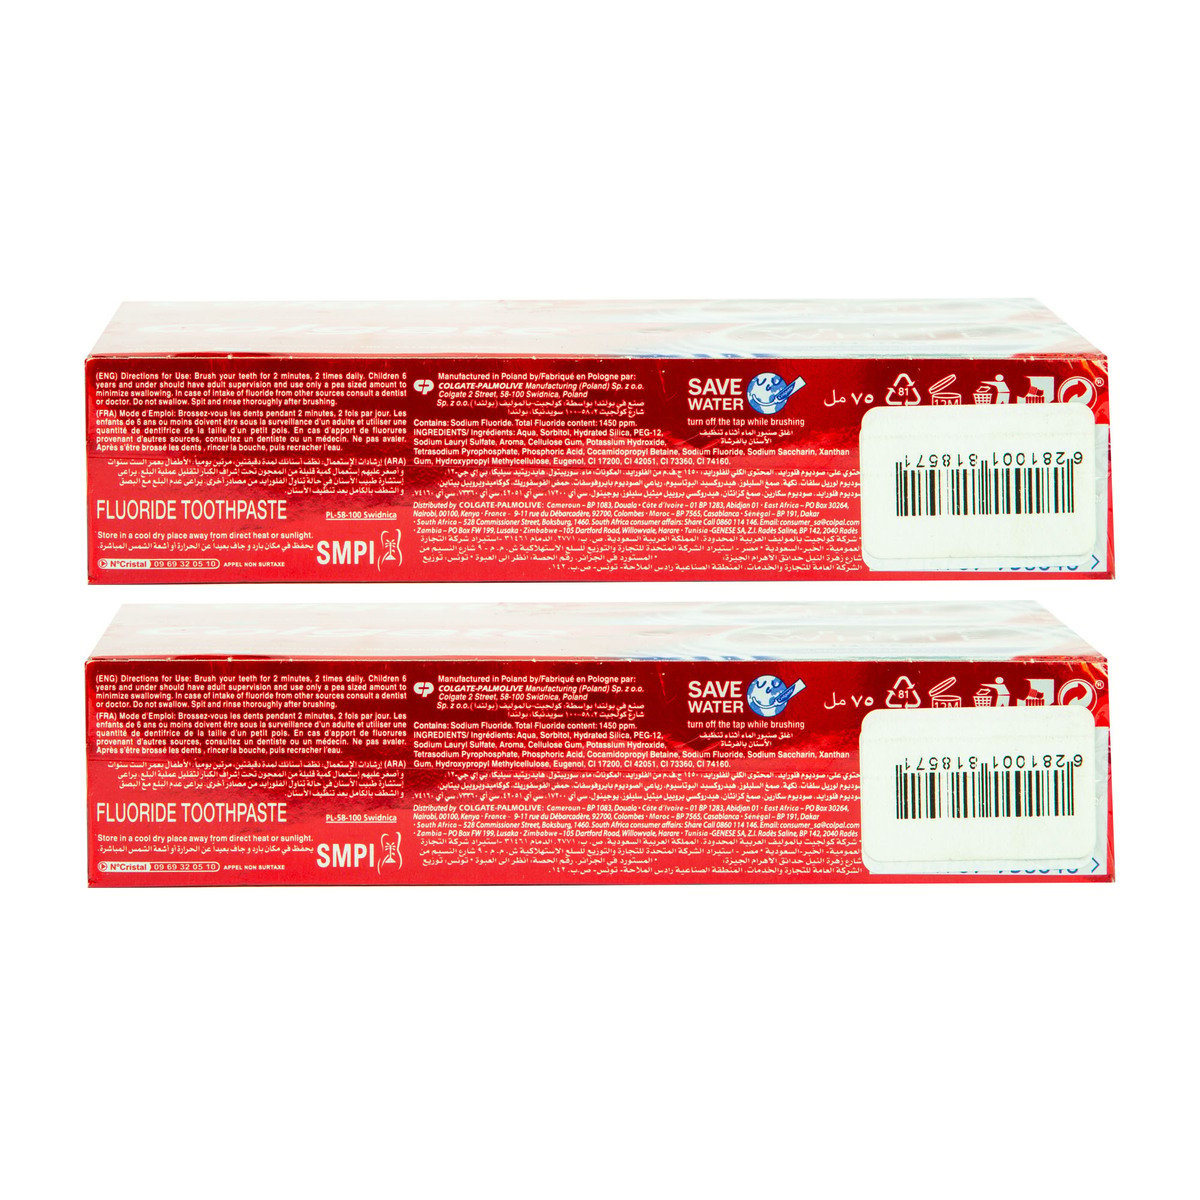 Colgate Optic White Toothpaste Value Pack 2 x 75 ml